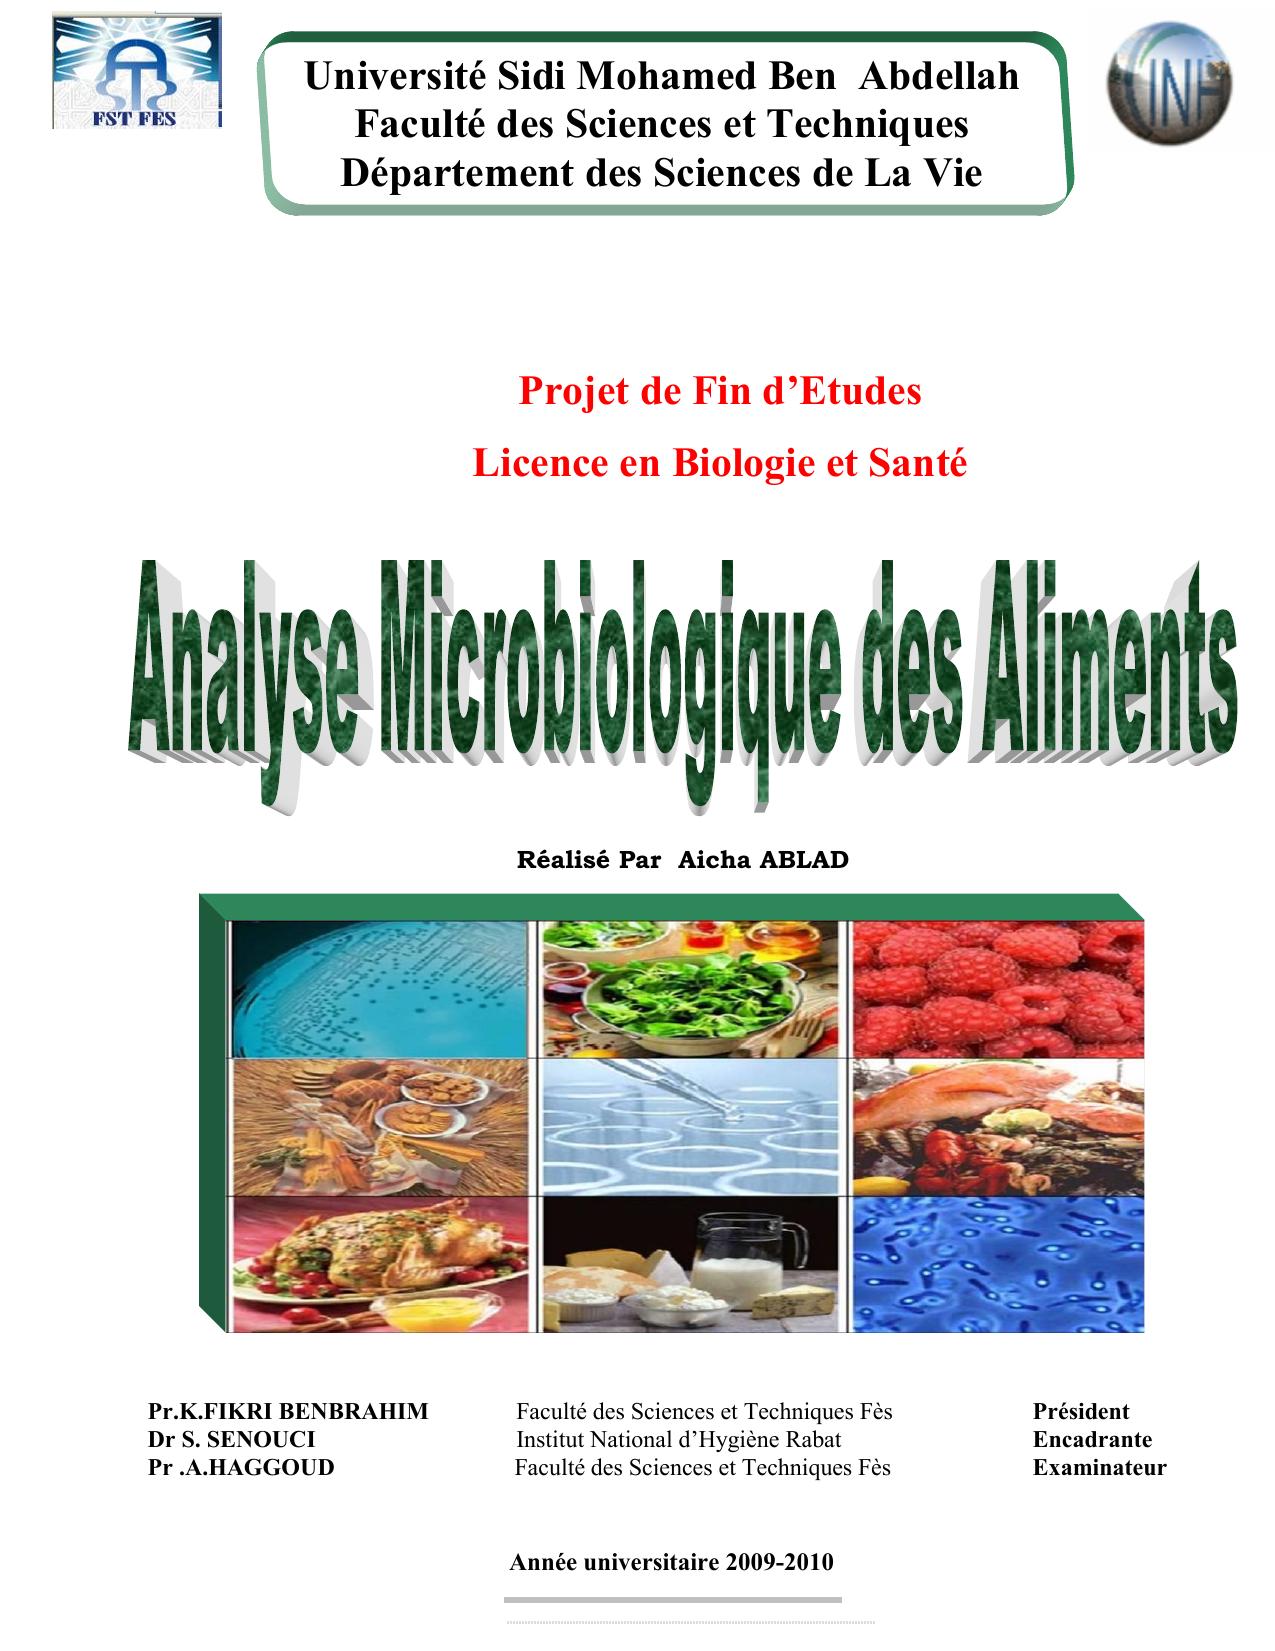 Analyse Microbiologique des Aliments Introduction